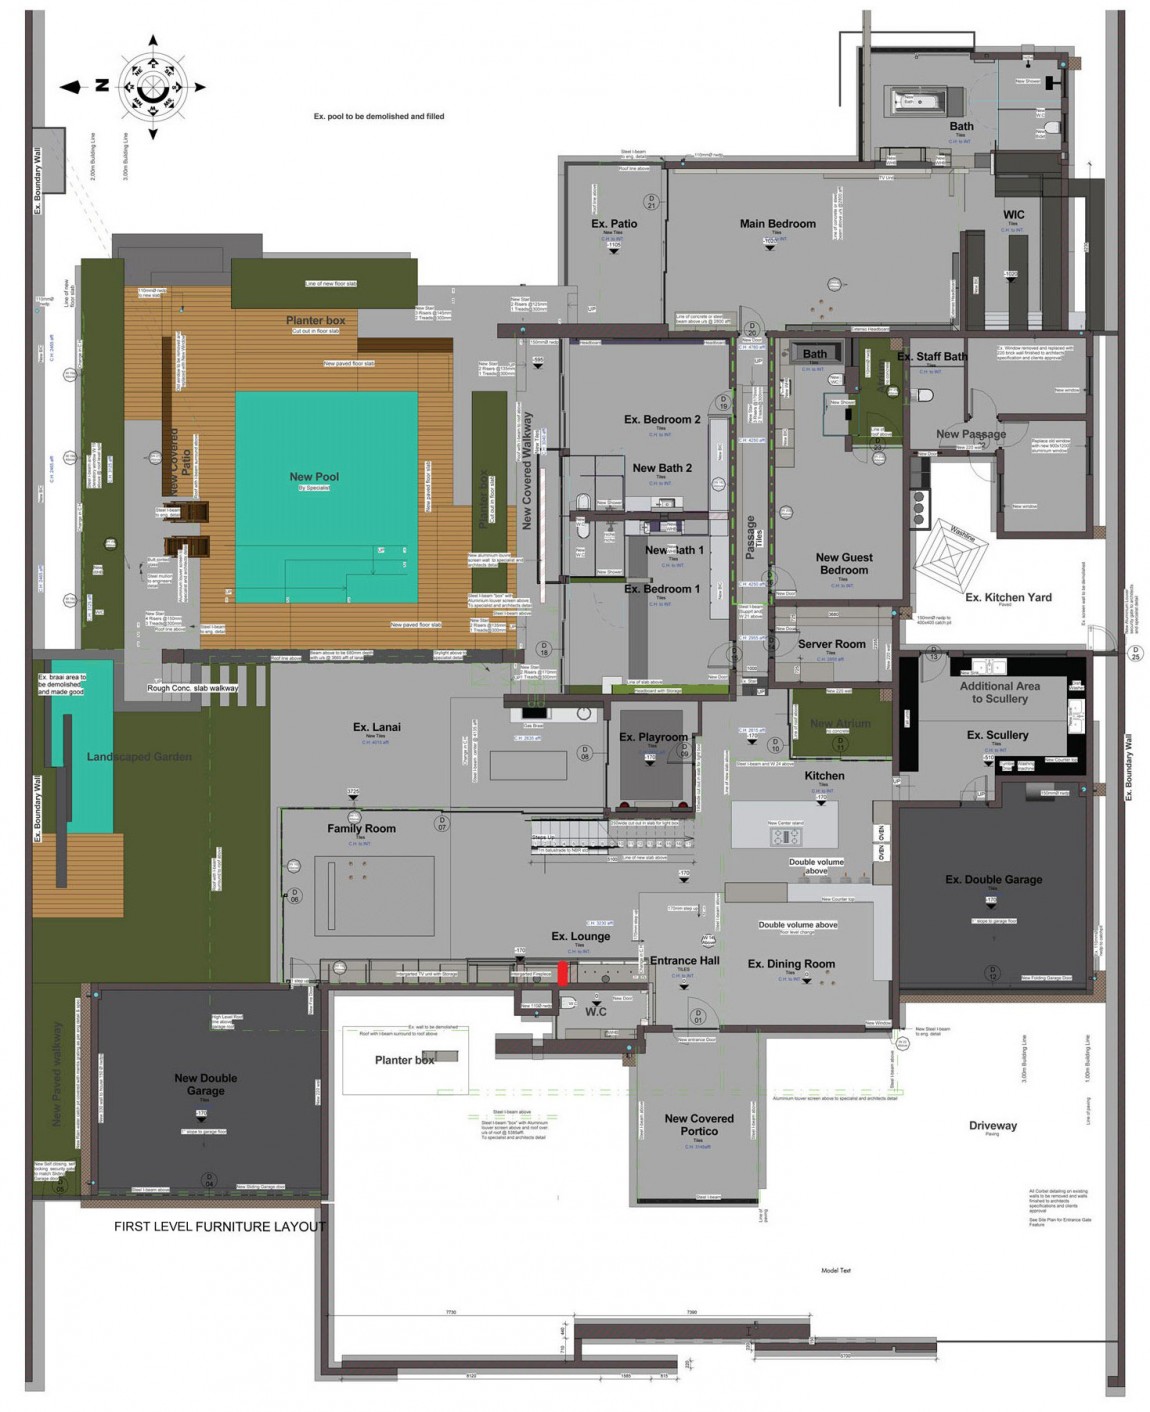 Detailed floor plan of House Sar by Nico van der Meulen Architects